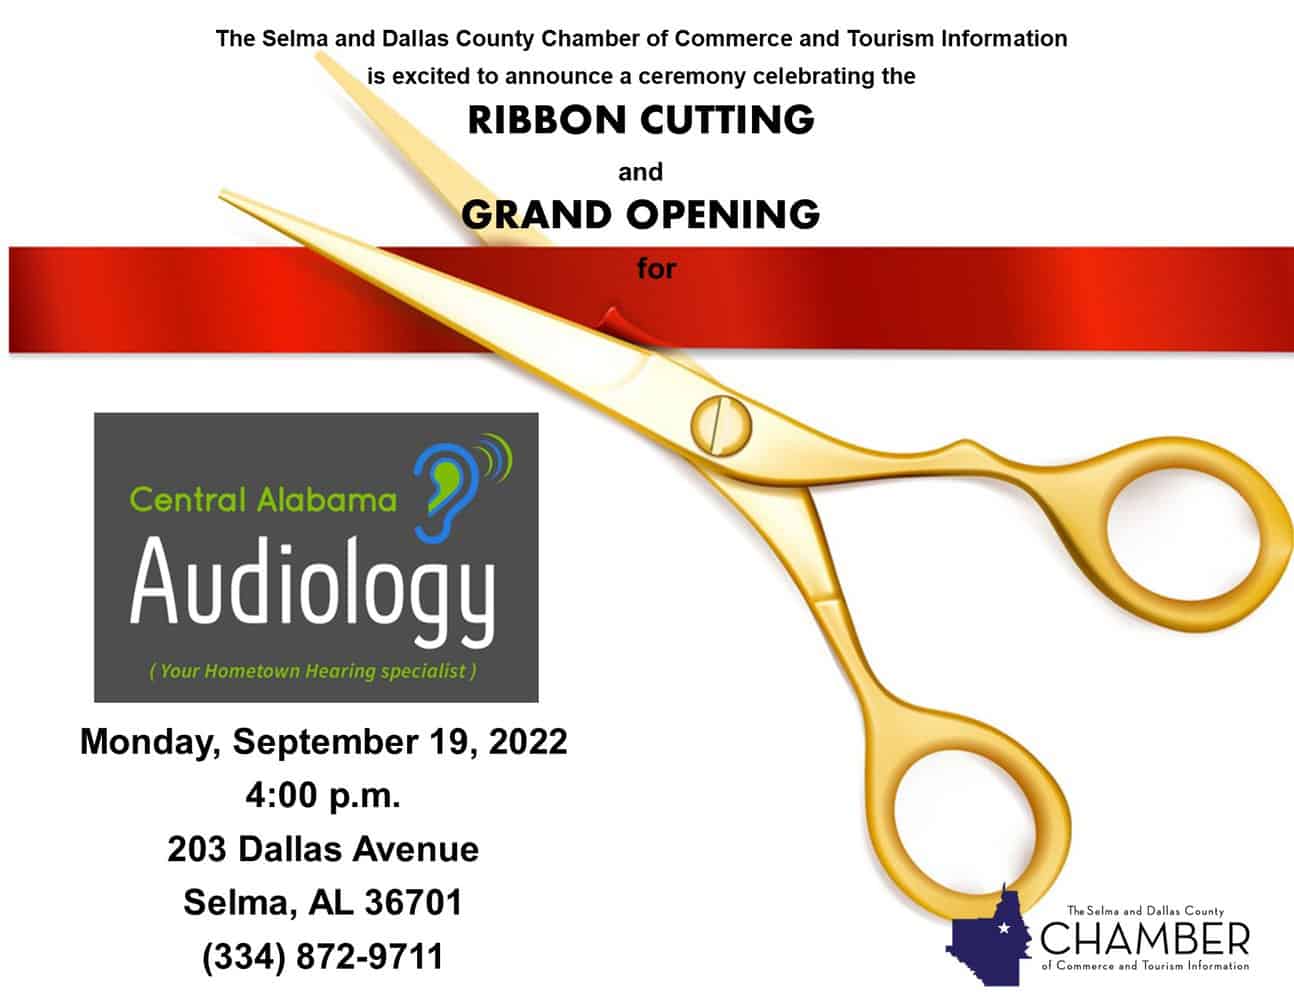 Central Alabama Audiology Grand Opening Ribbon Cutting Celebration